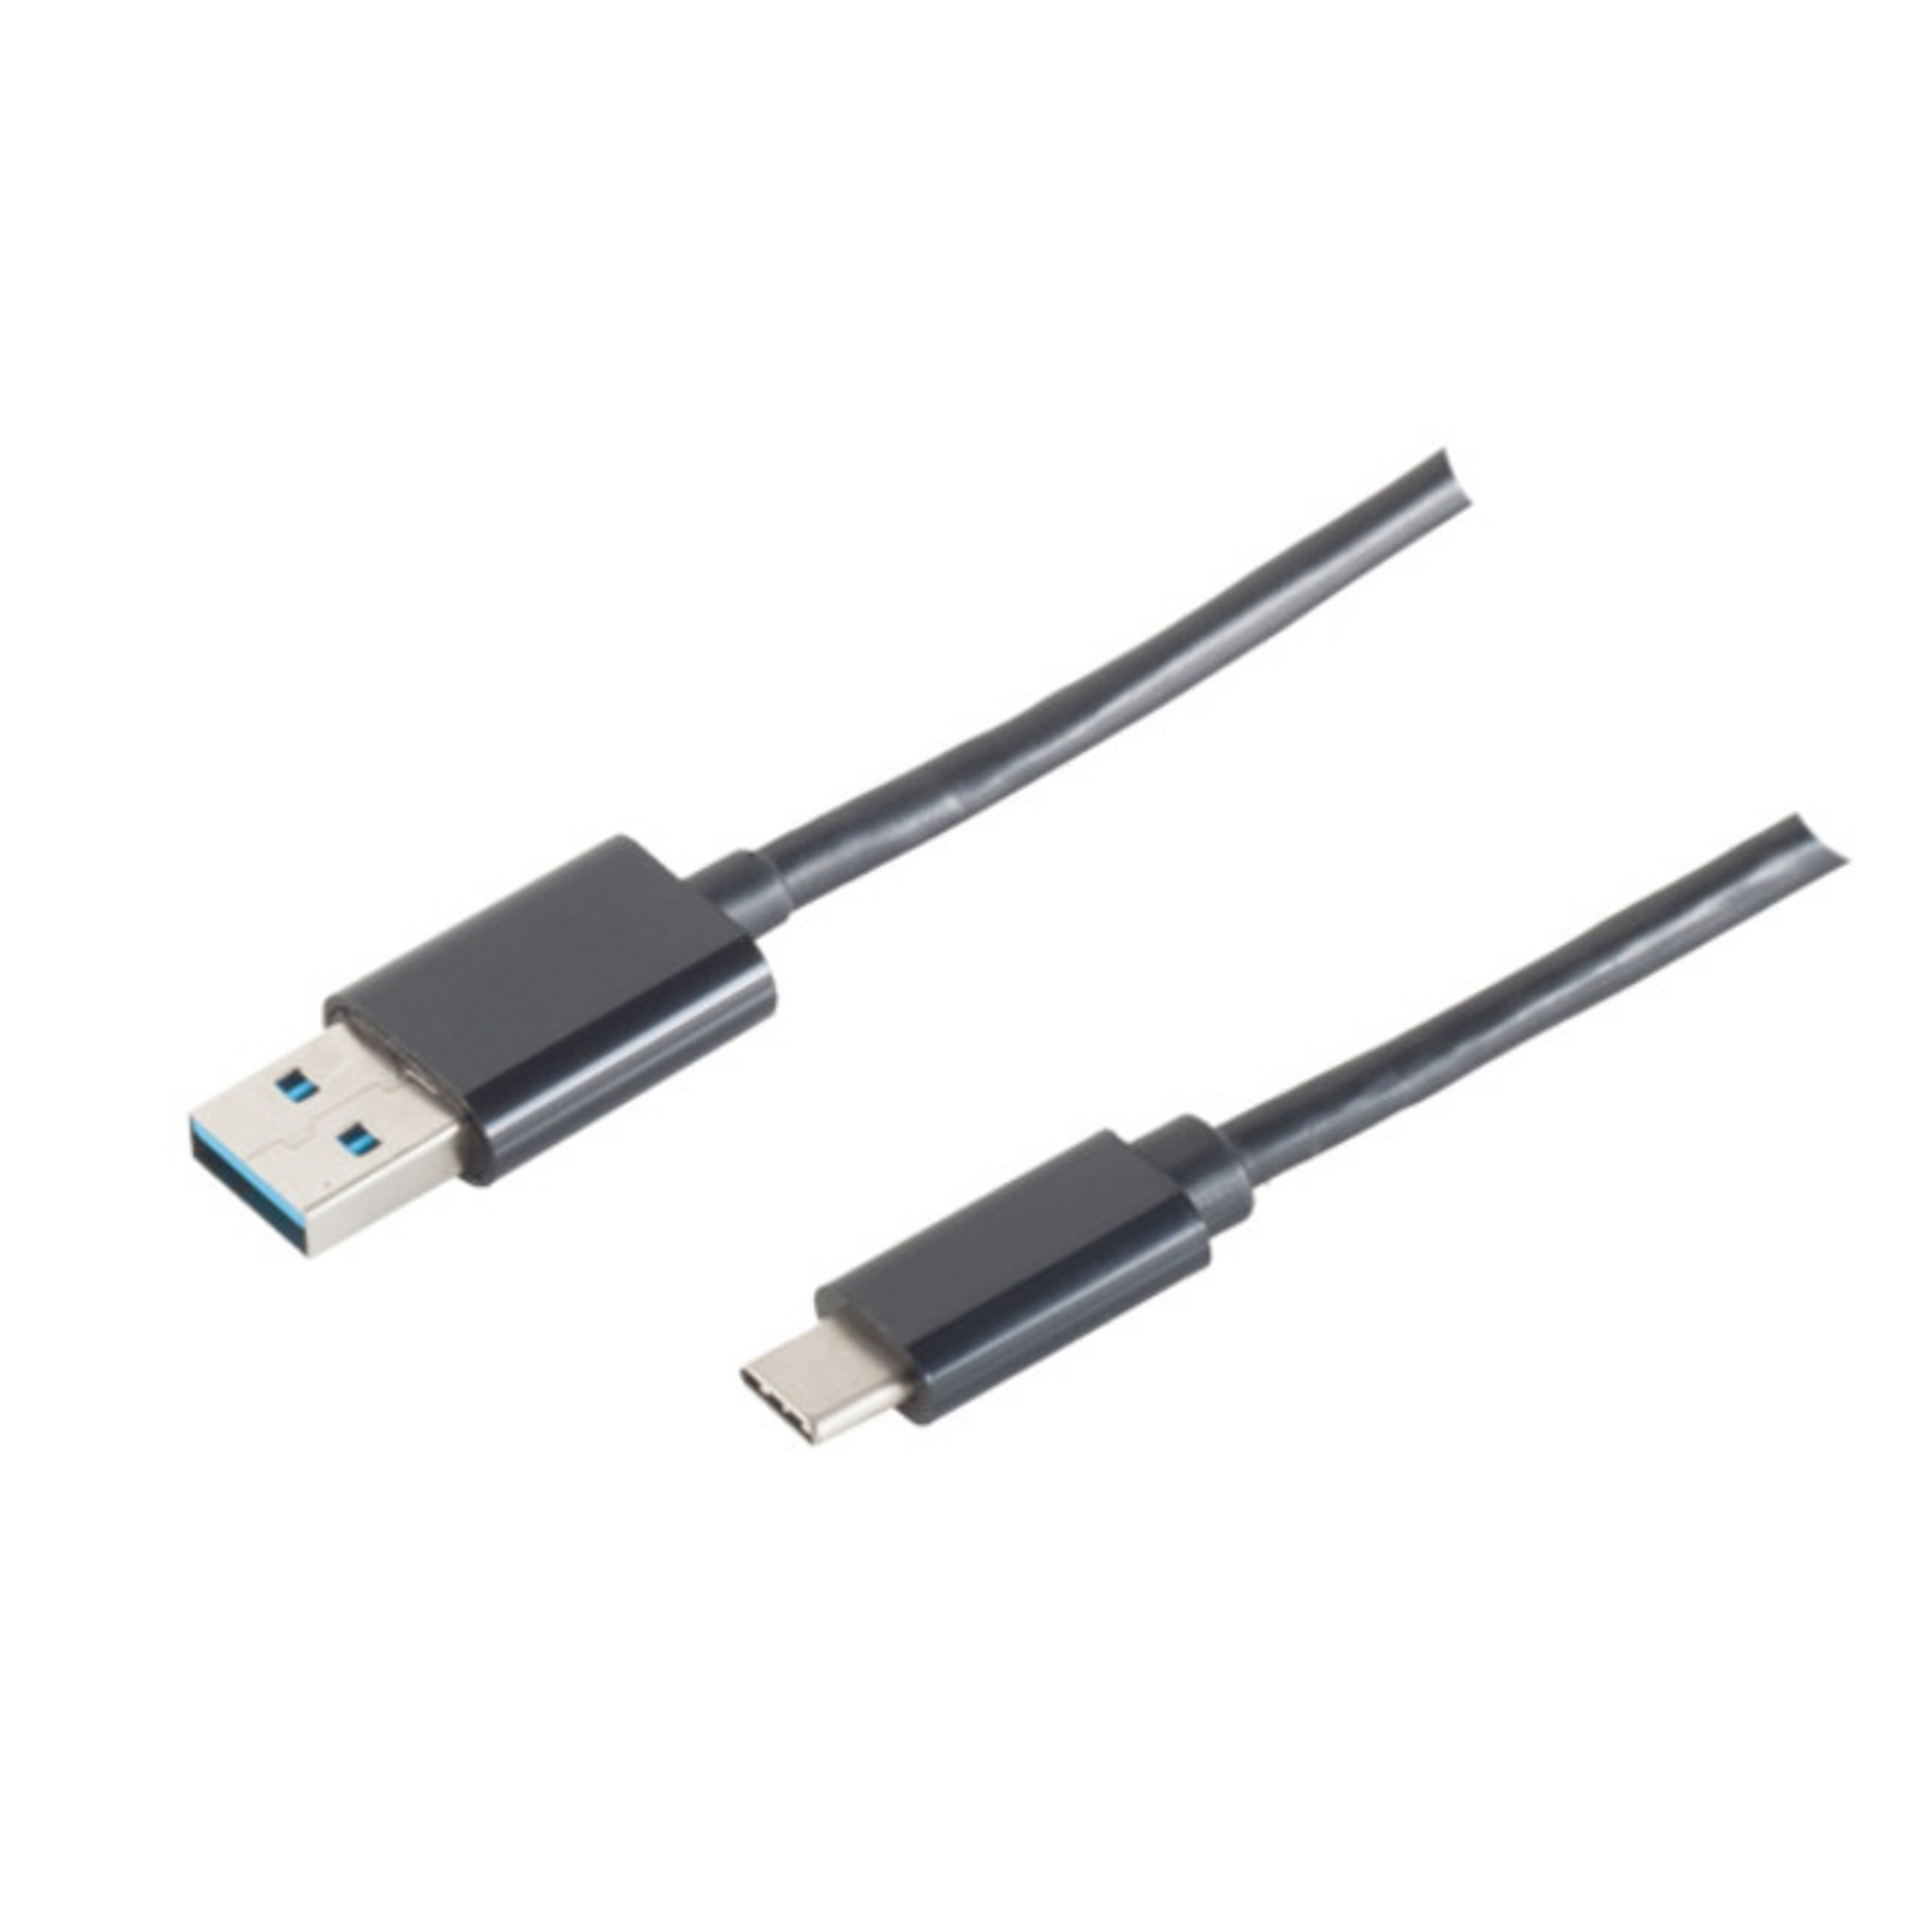 S/CONN MAXIMUM CONNECTIVITY USB 3.0 3.1 schwarz, Stecker, USB A 1m C Kabel USB Stecker